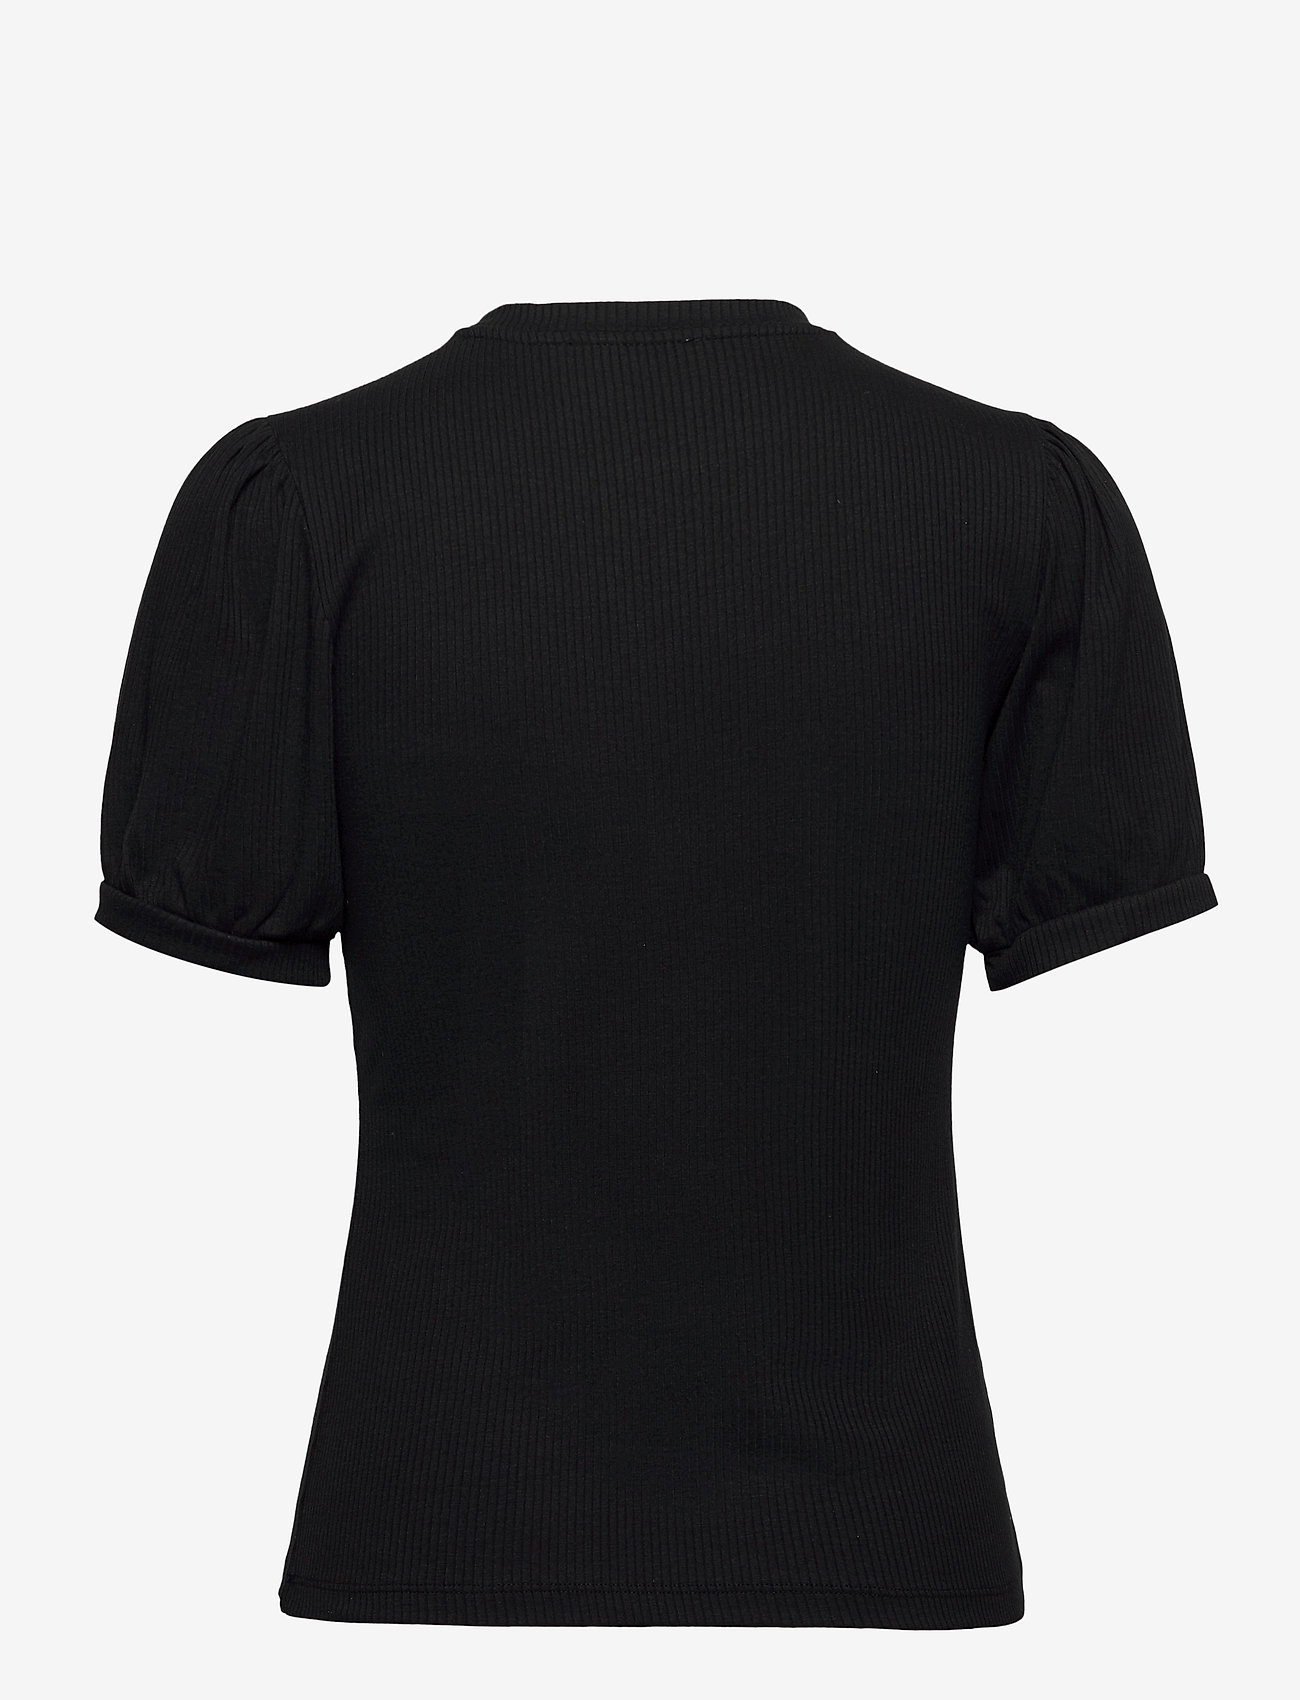 Minus - Johanna T-shirt - najniższe ceny - sort - 1